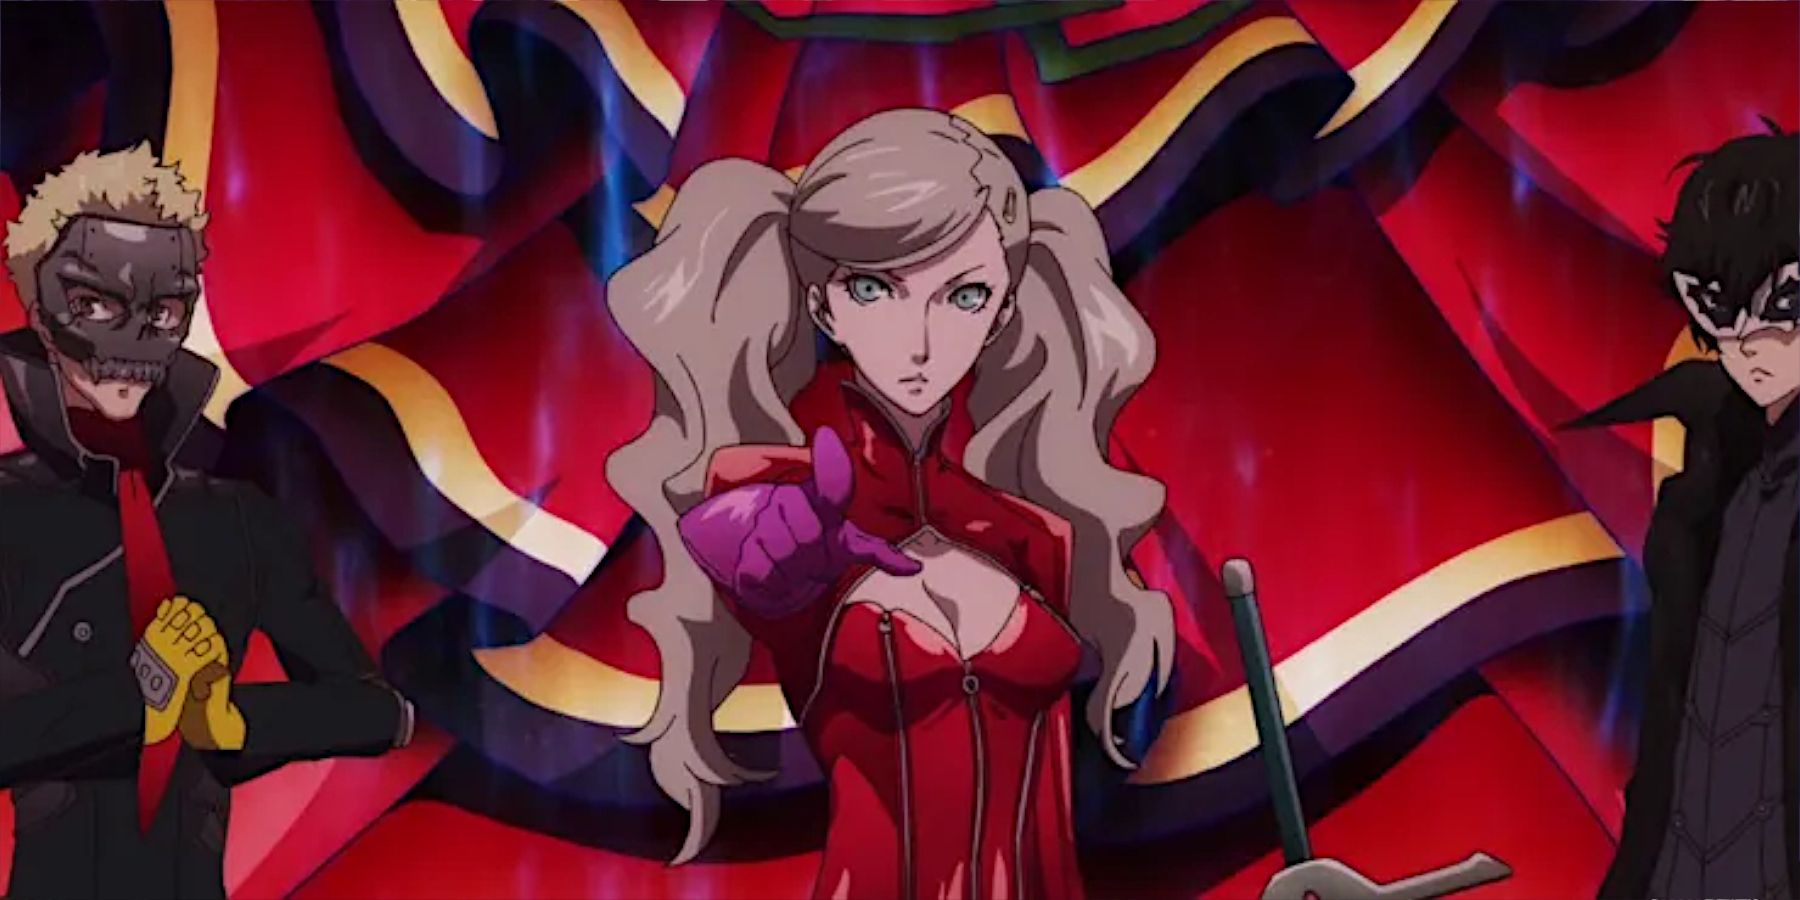 Ann taking lead Persona 5